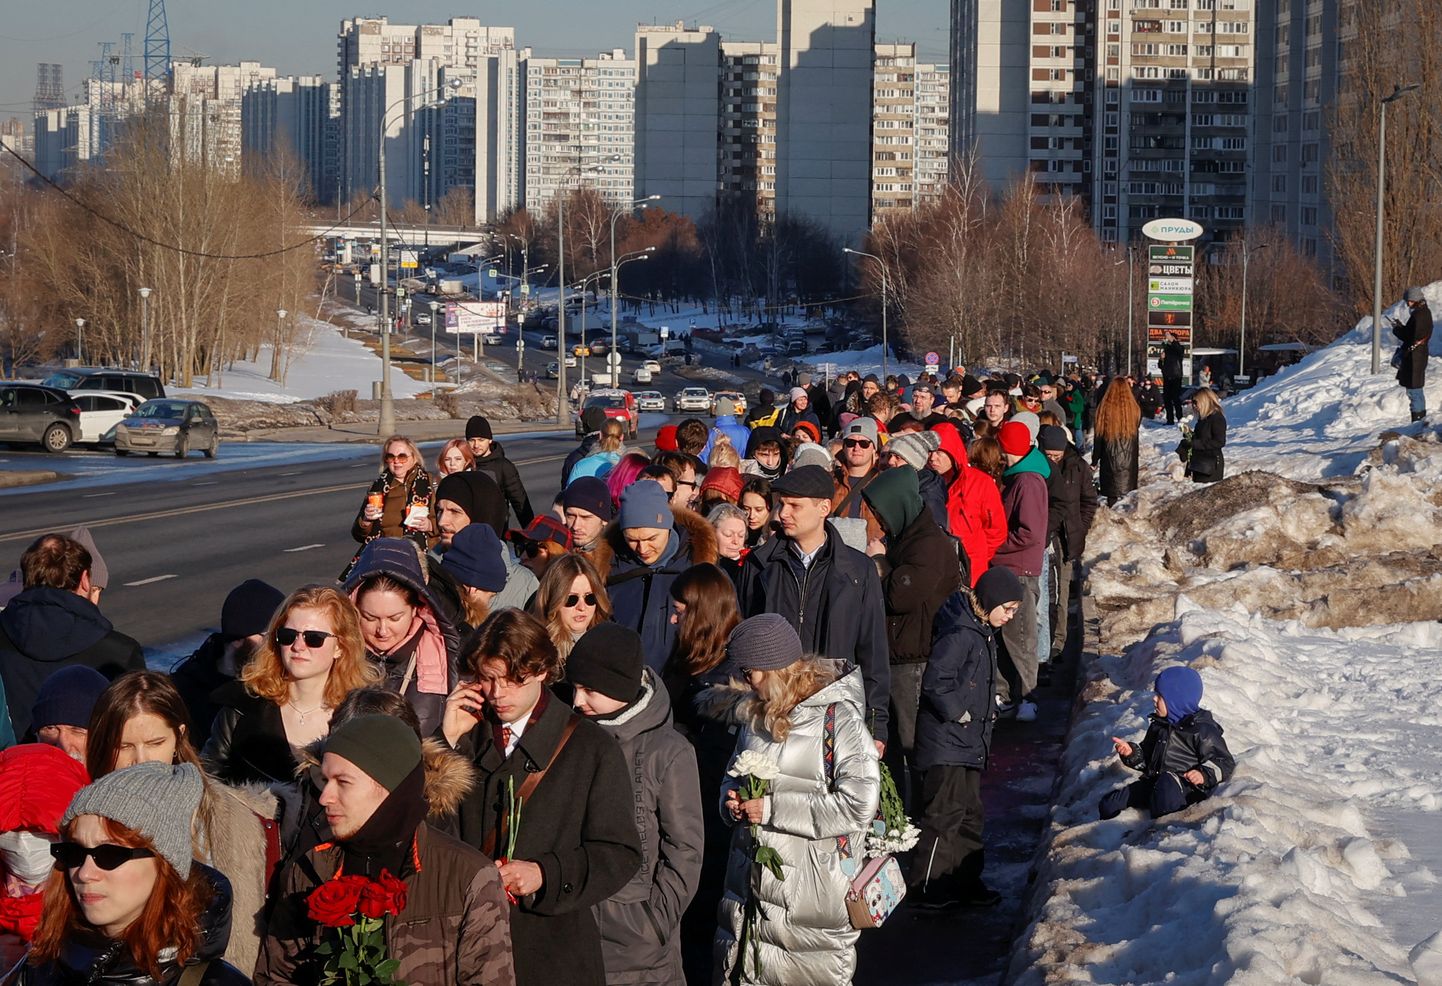 Leinajad järjekorras ootamas pääsu Moskva Borissovo kalmistule.